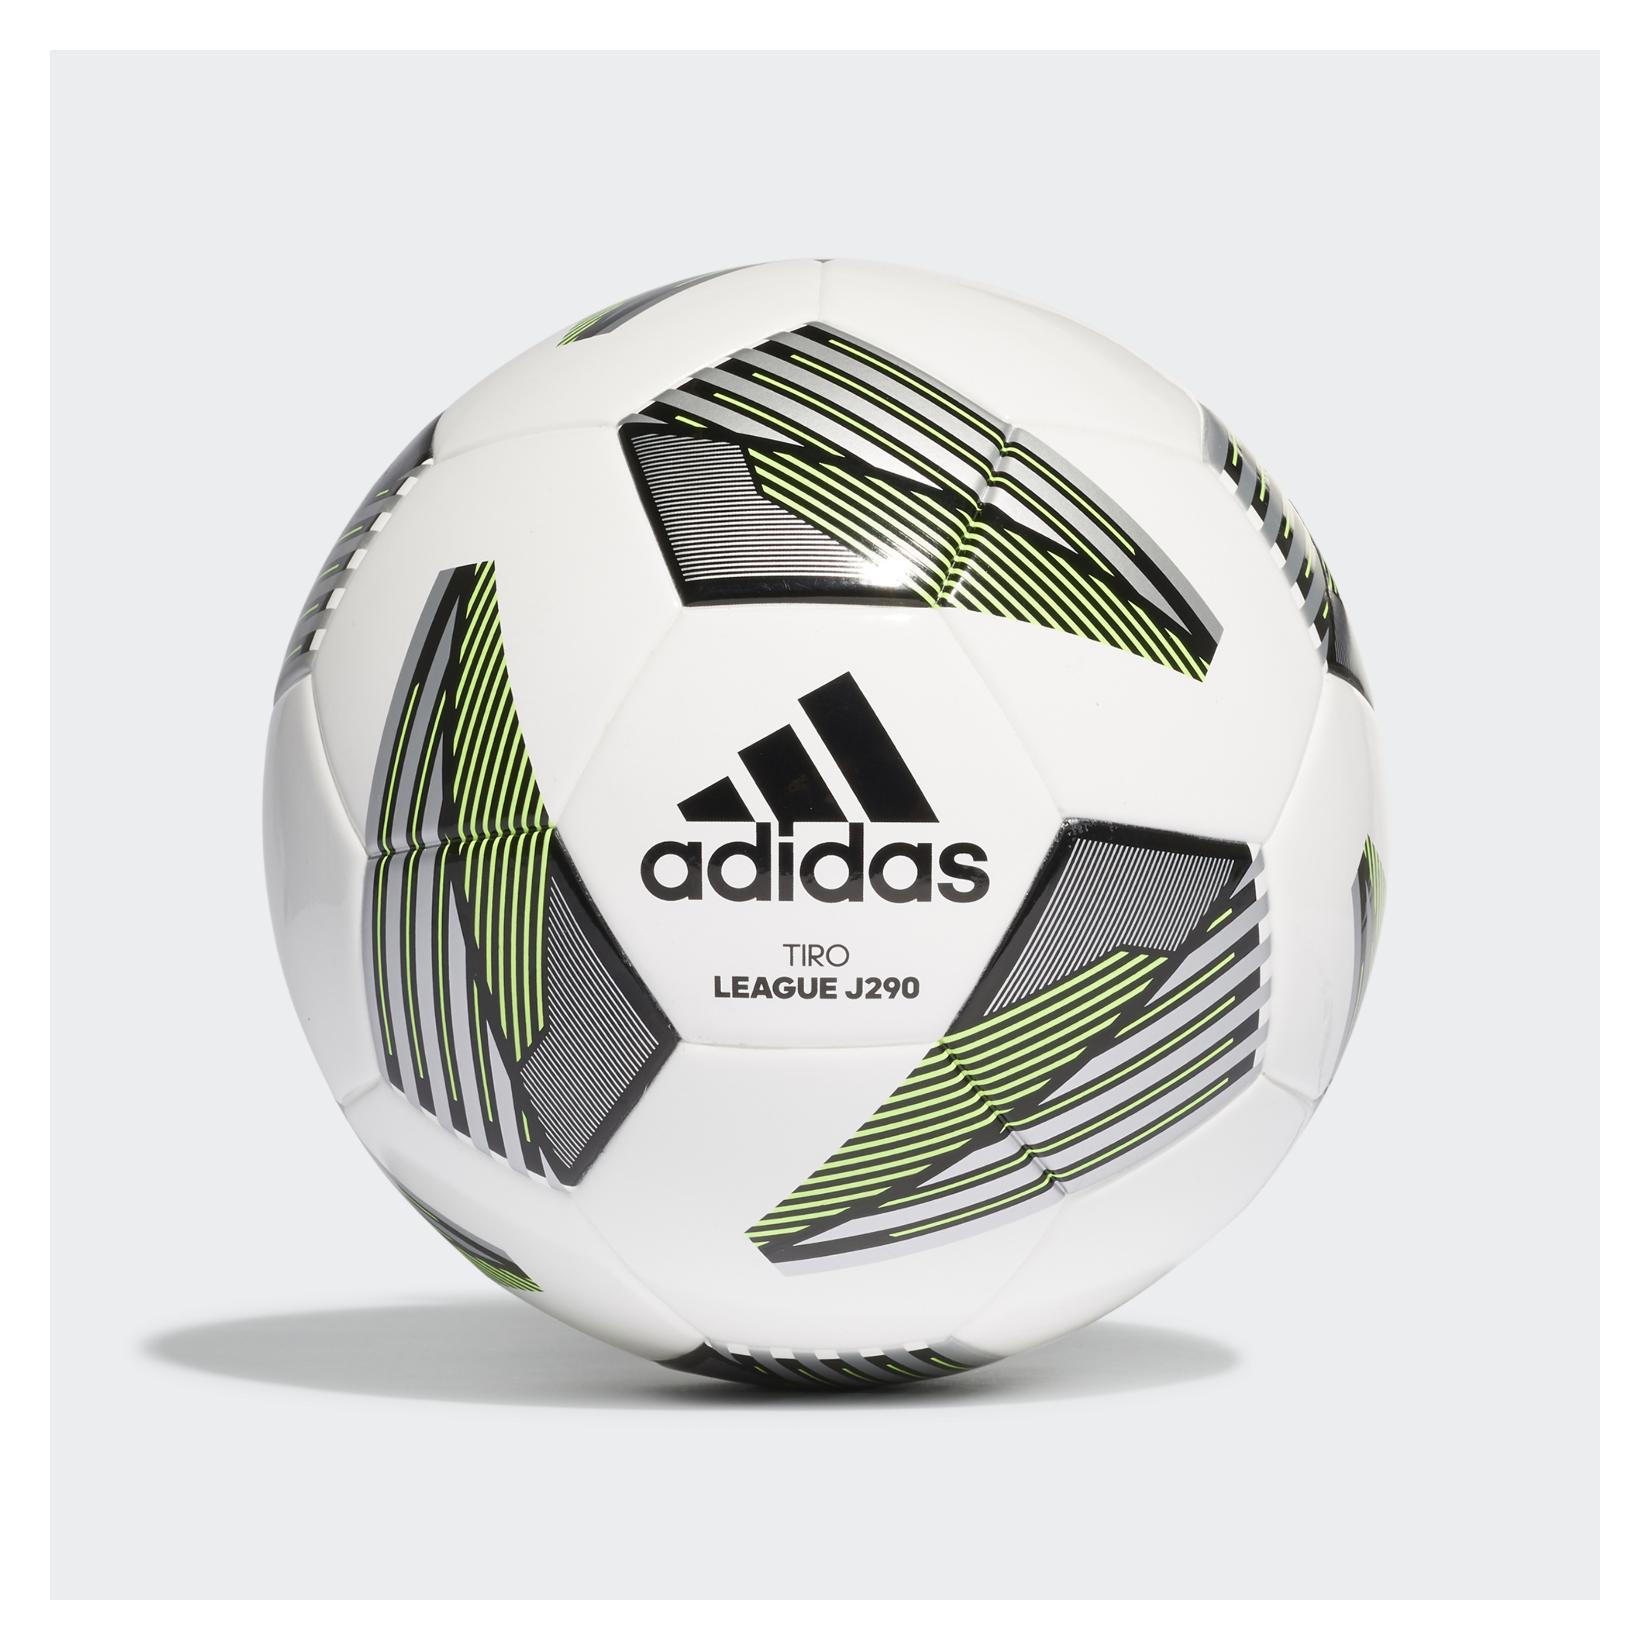 adidas Tiro League Junior 290 Ball - Kids 290 Gram Football - Kitlocker.com